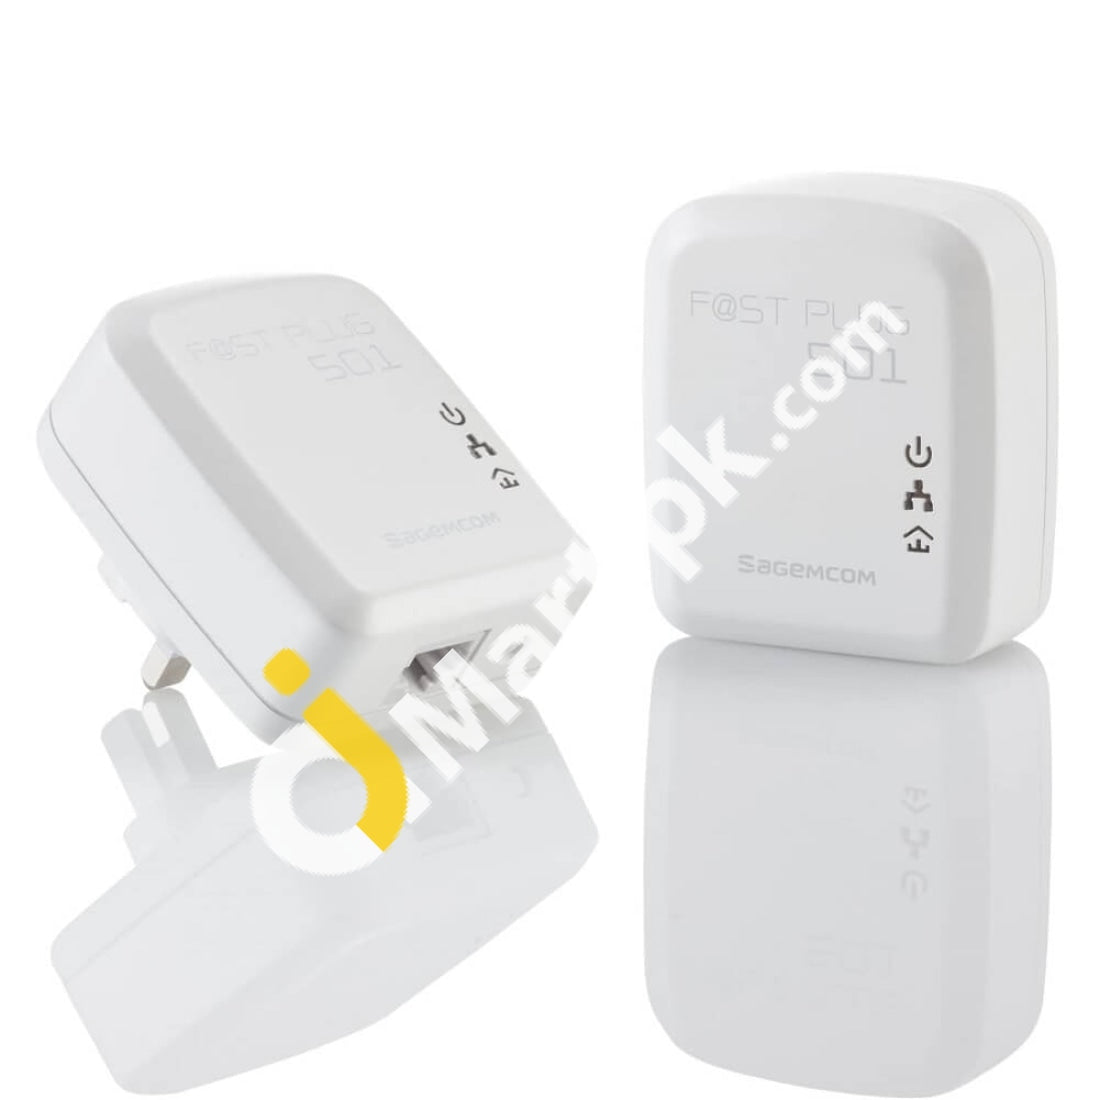 Sagemcom Fast Plug 501 Powerline Wifi Extender (2 Pack) - Imported From Uk